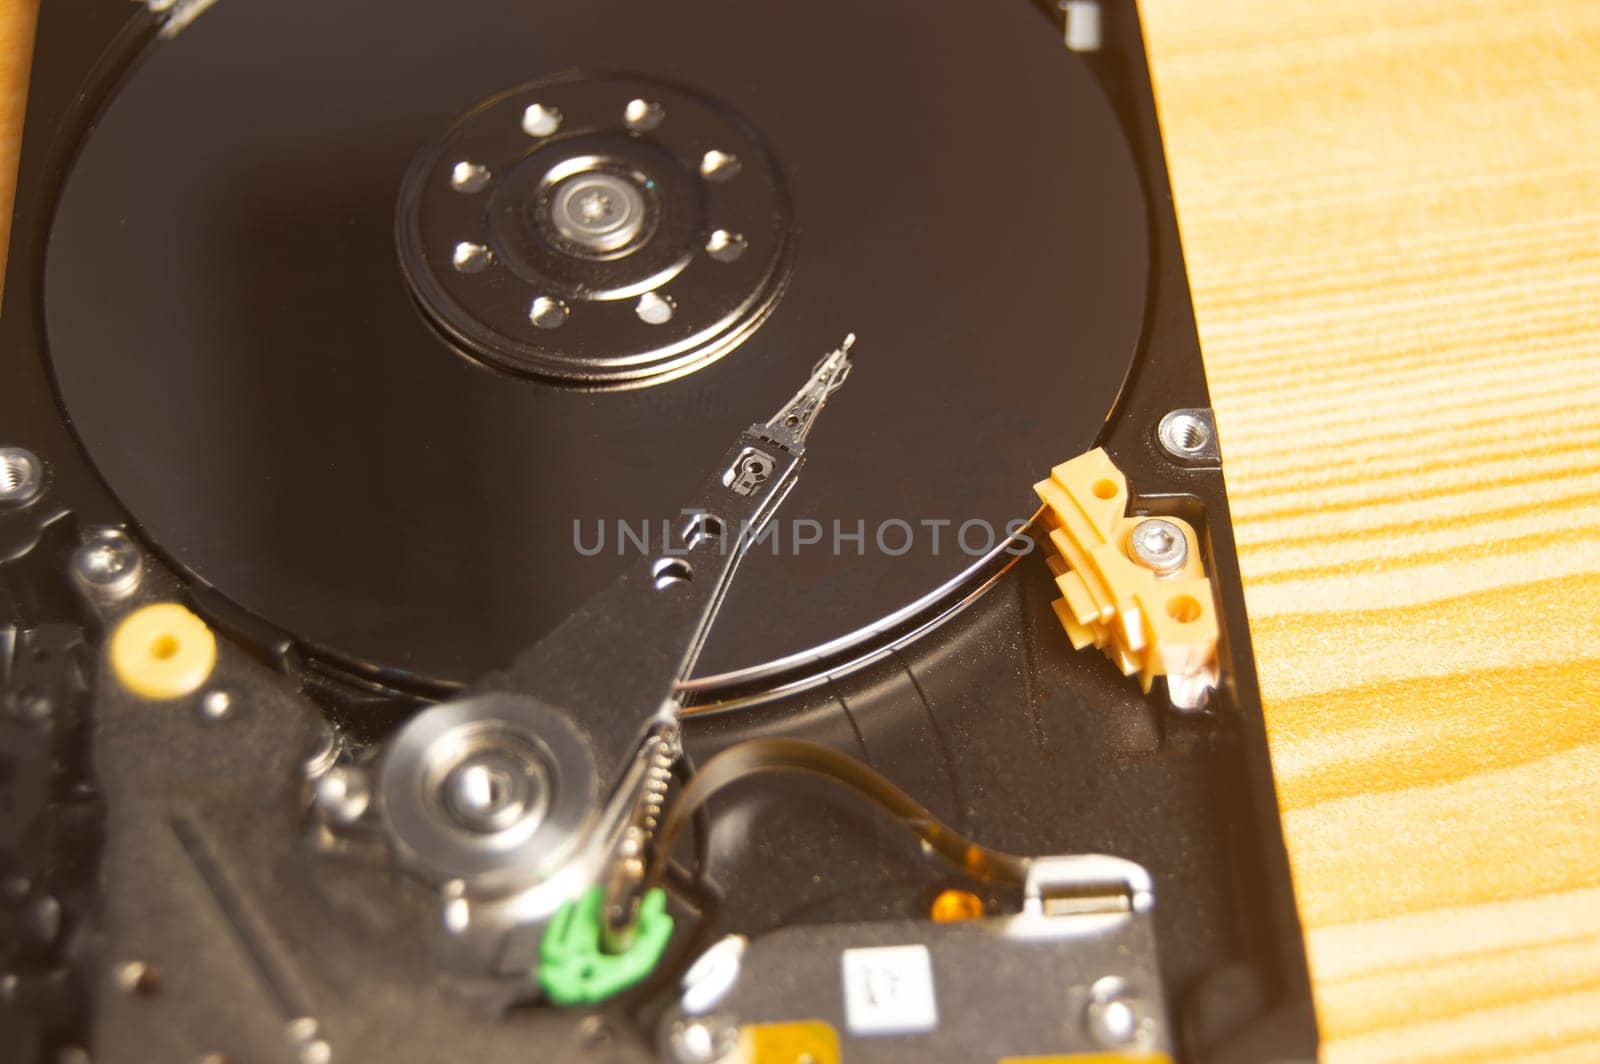 Close-up top view of hard drive by boonruen